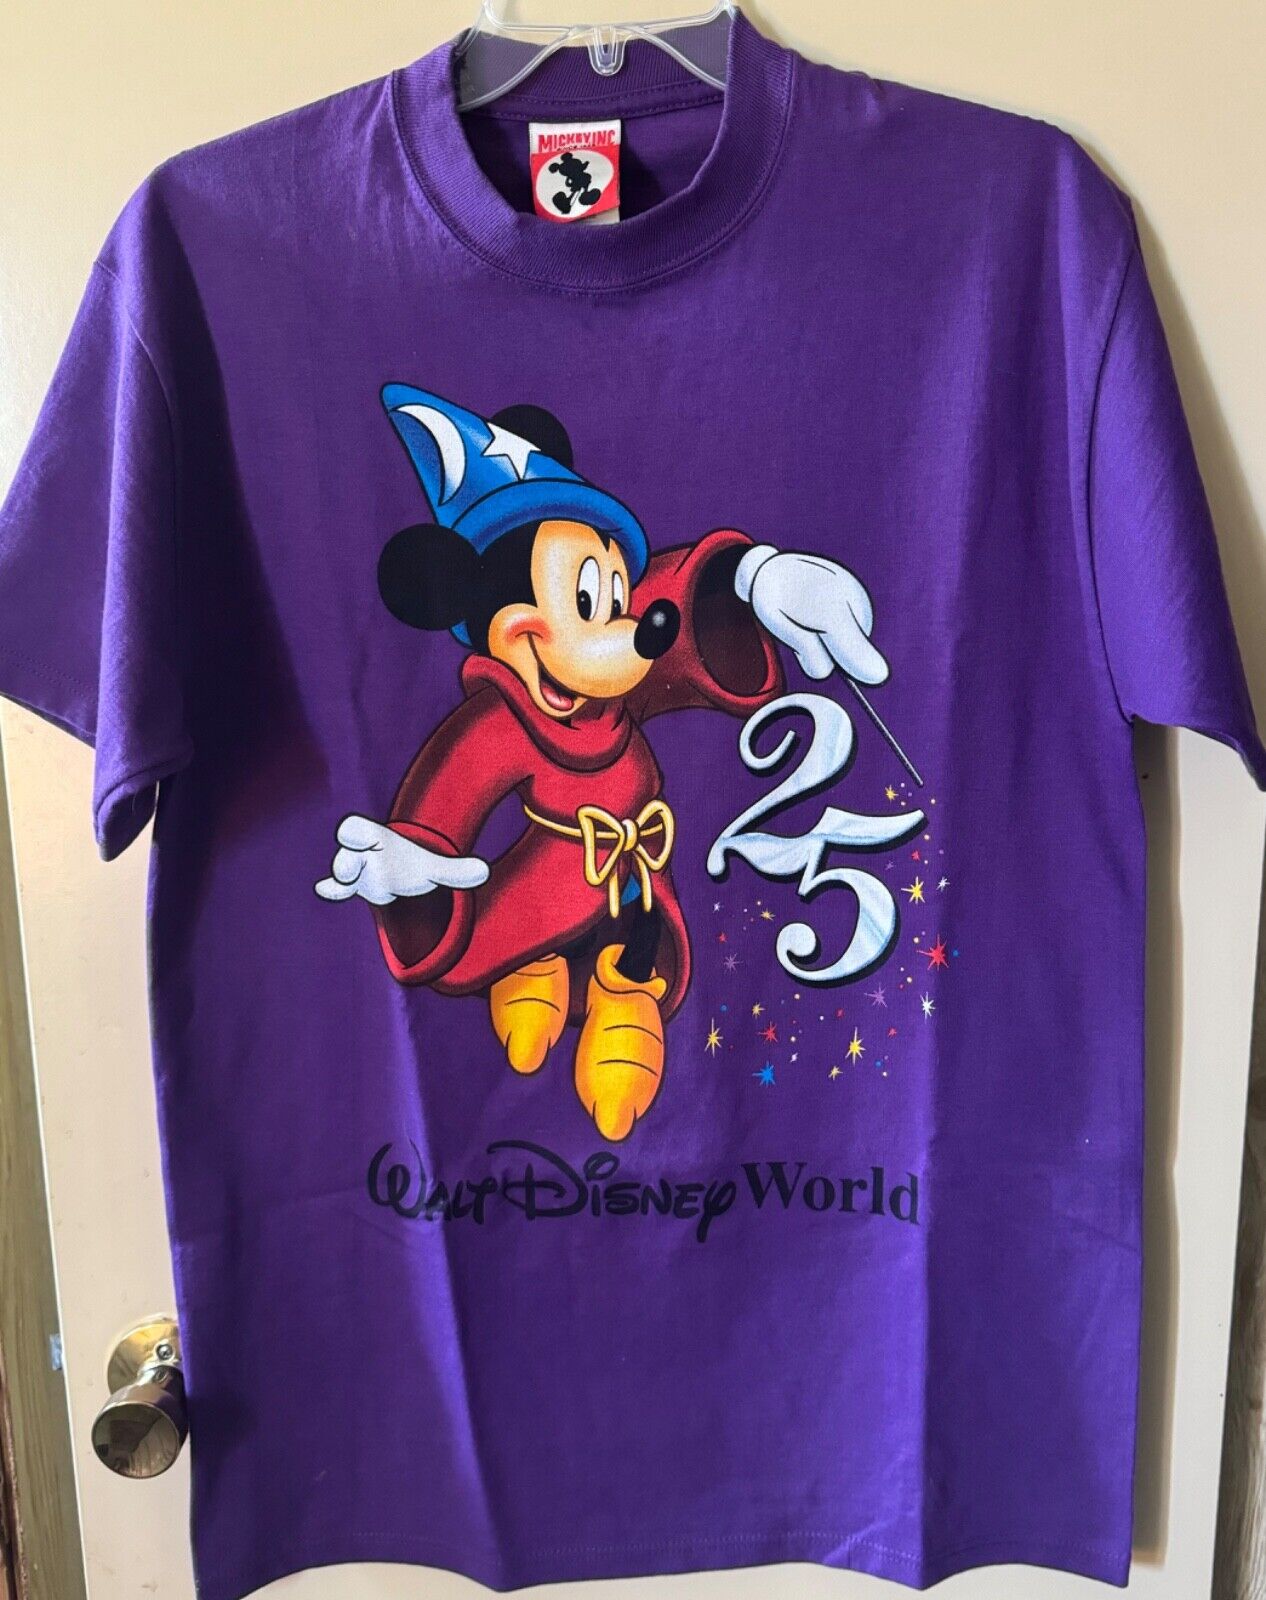 Vintage 1990s Walt Disney World 25th Anniversary Purple T-Shirt M Excellent